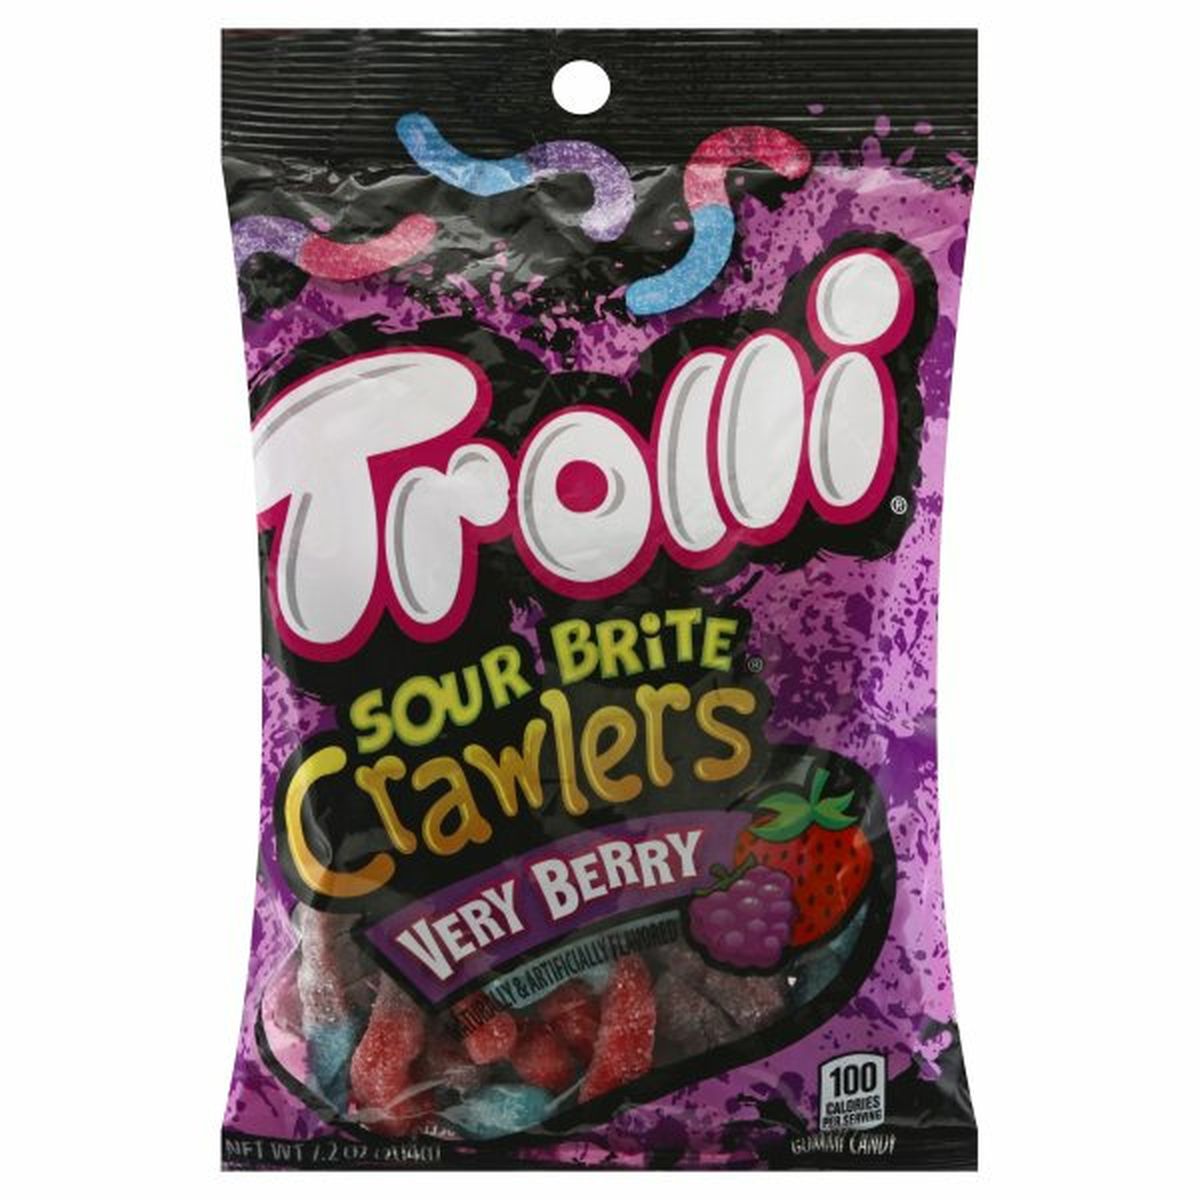 Calories in Trolli Crawlers, Very Berry